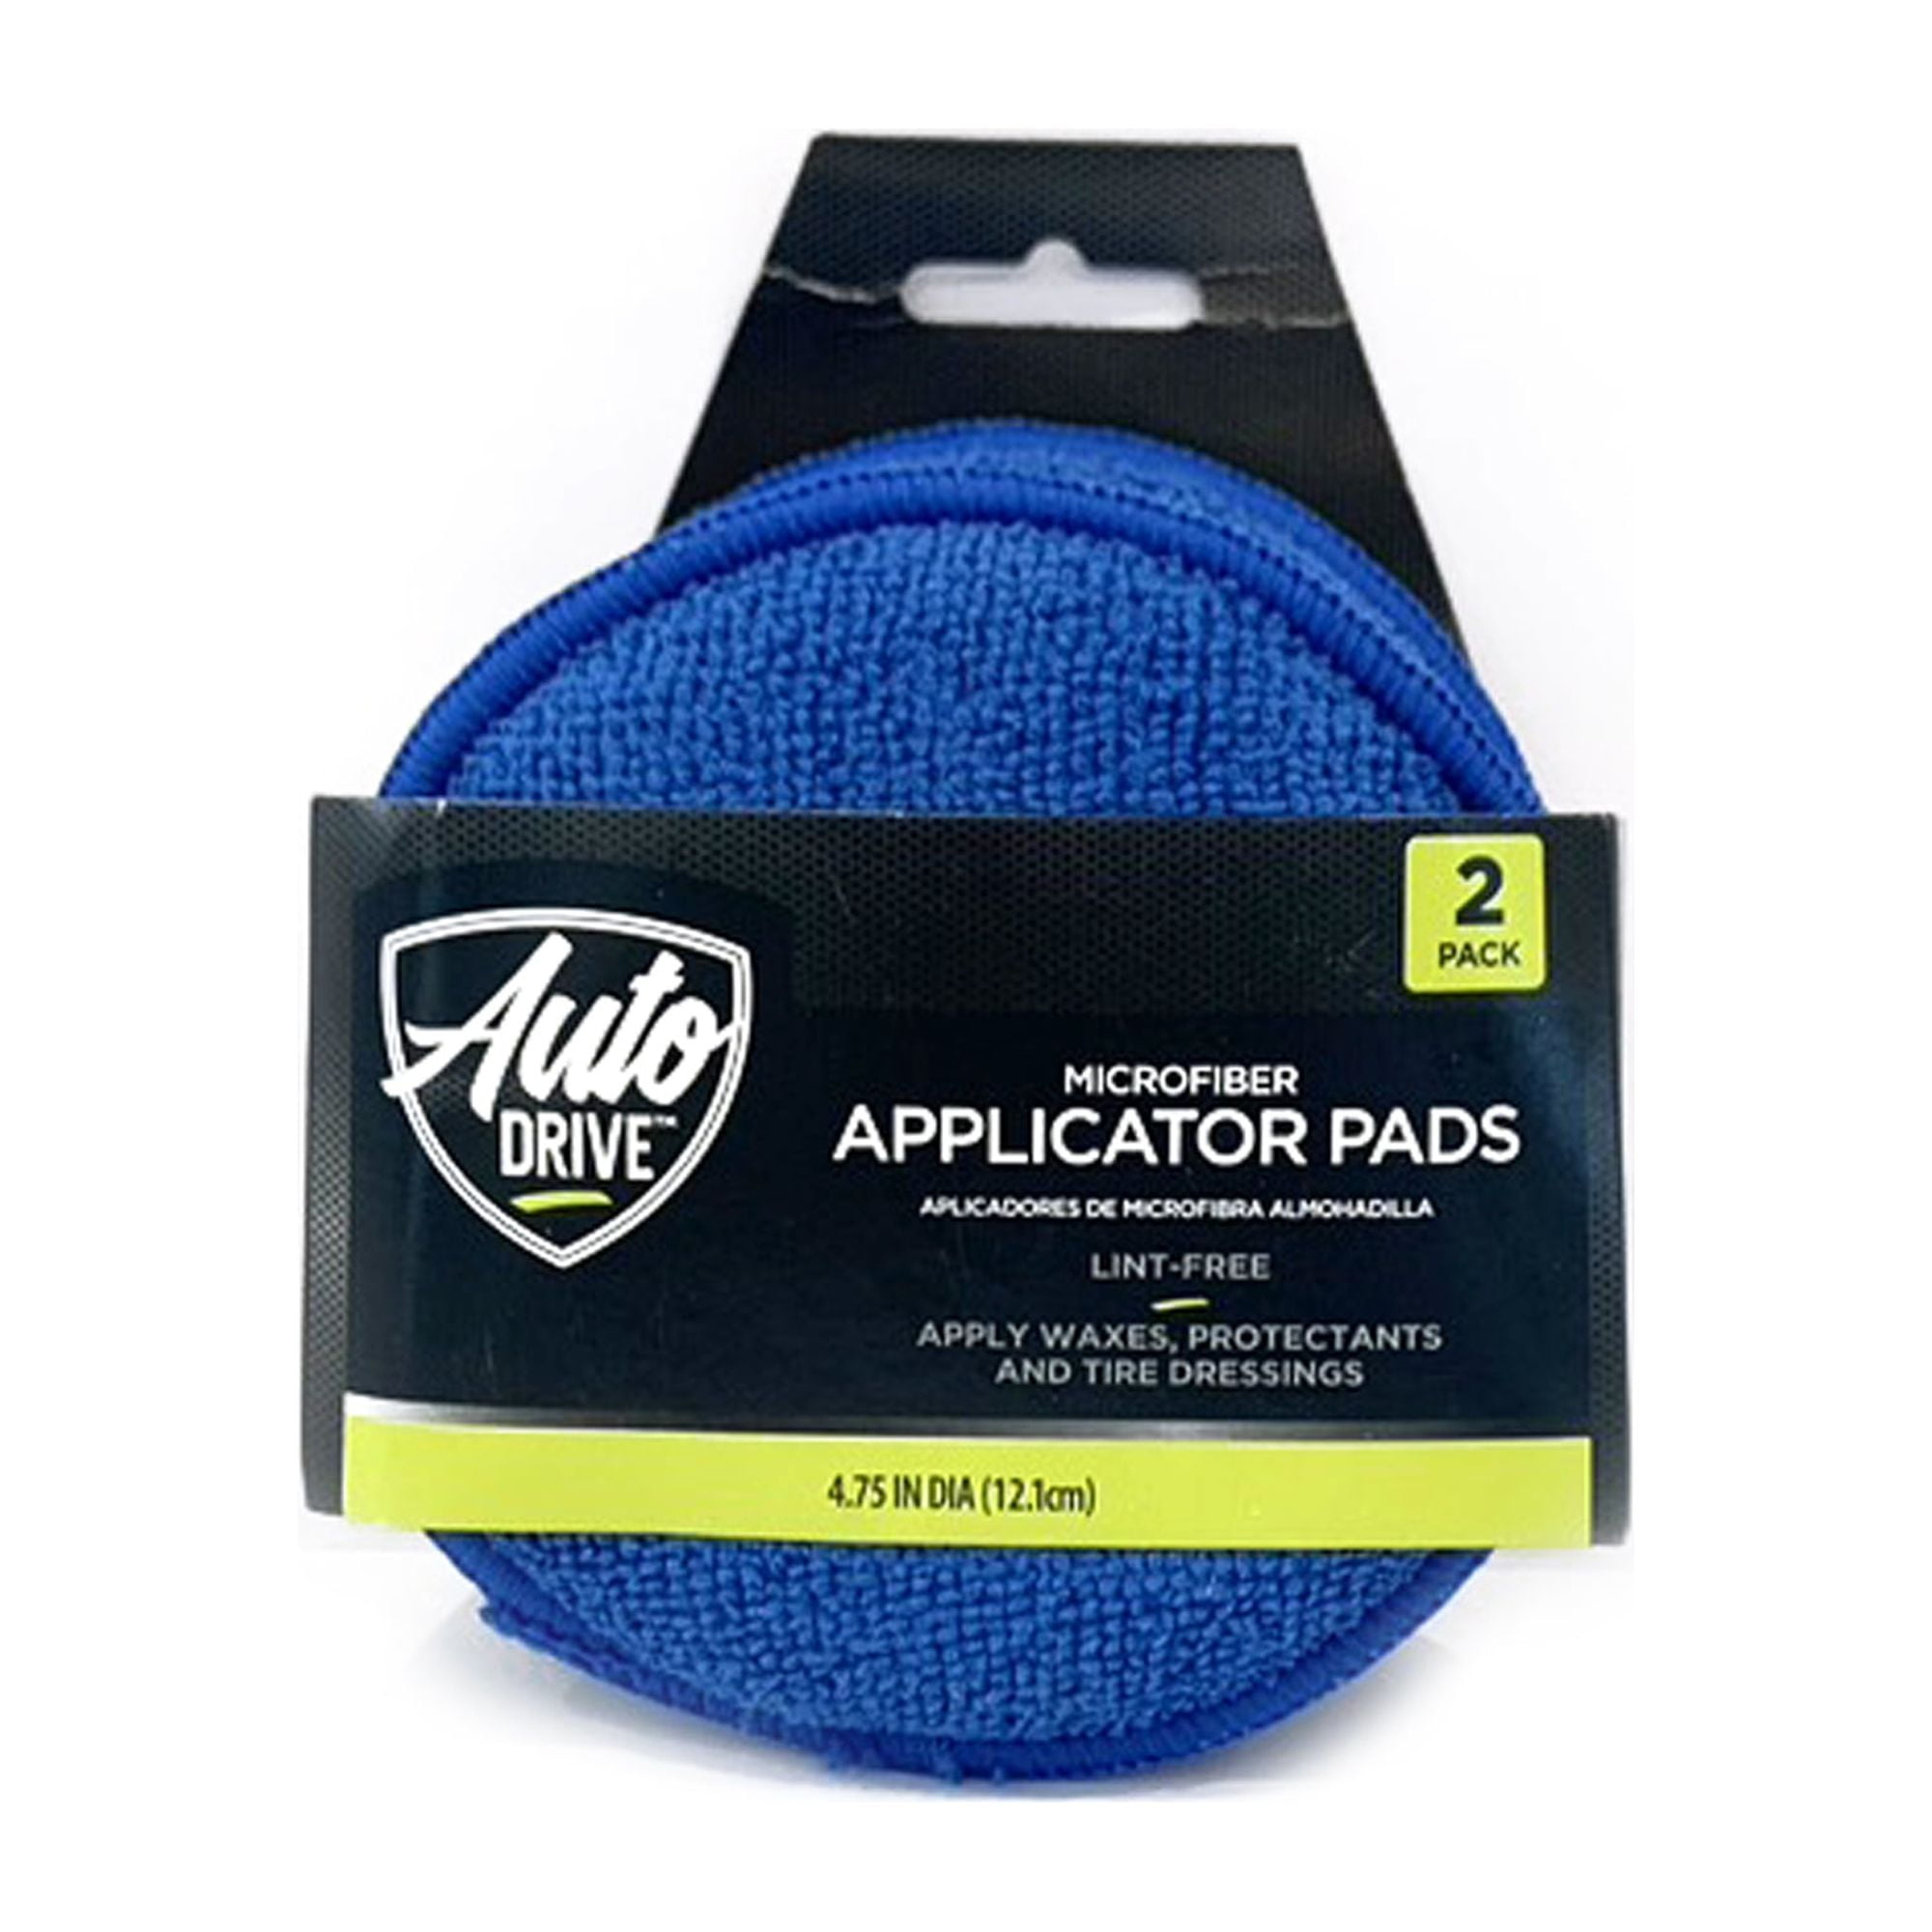 Auto Drive Microfiber Applicator Pads 2 Pack, Blue